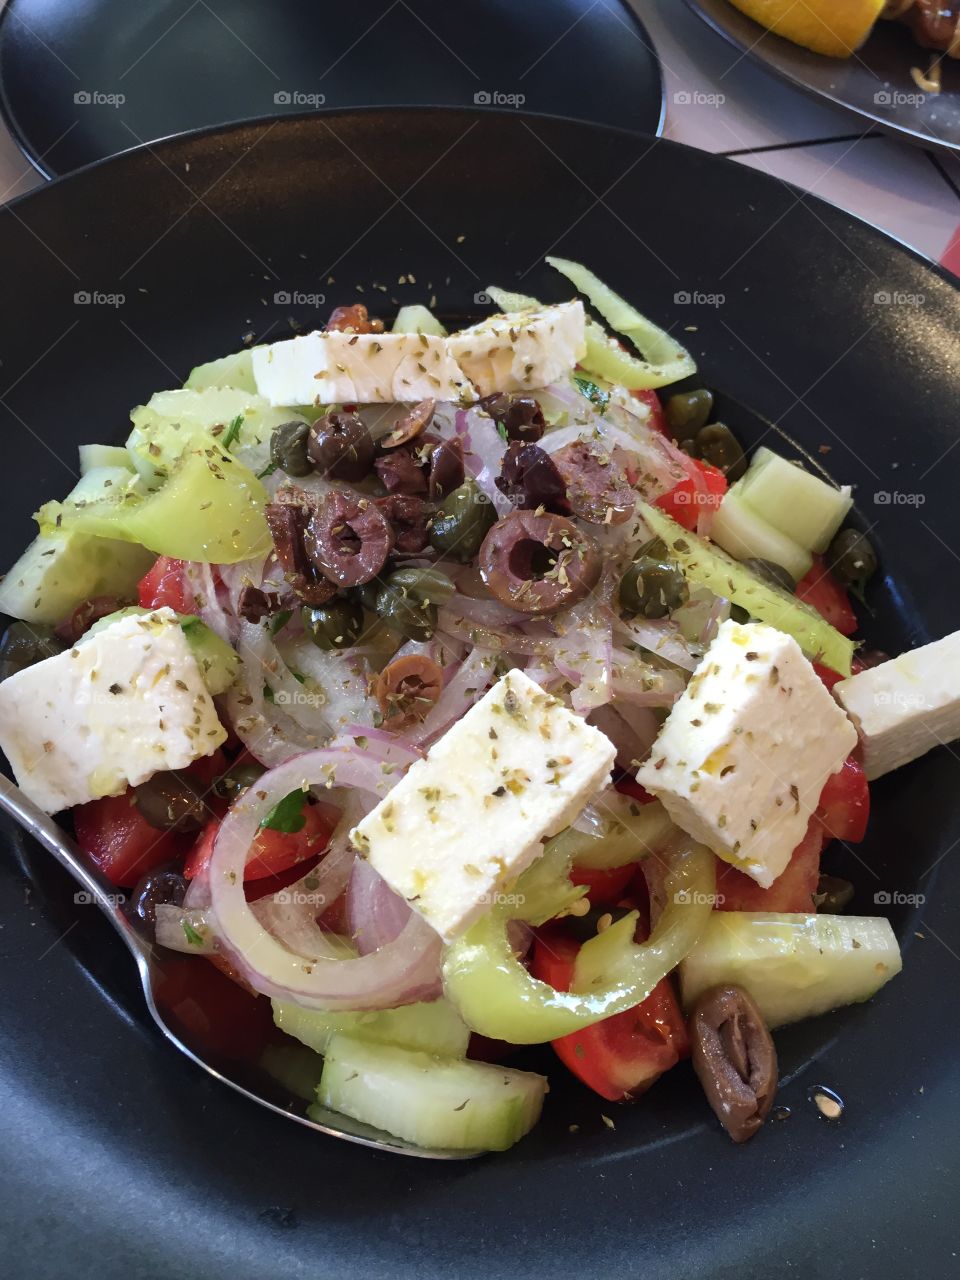 Traditional greek salad